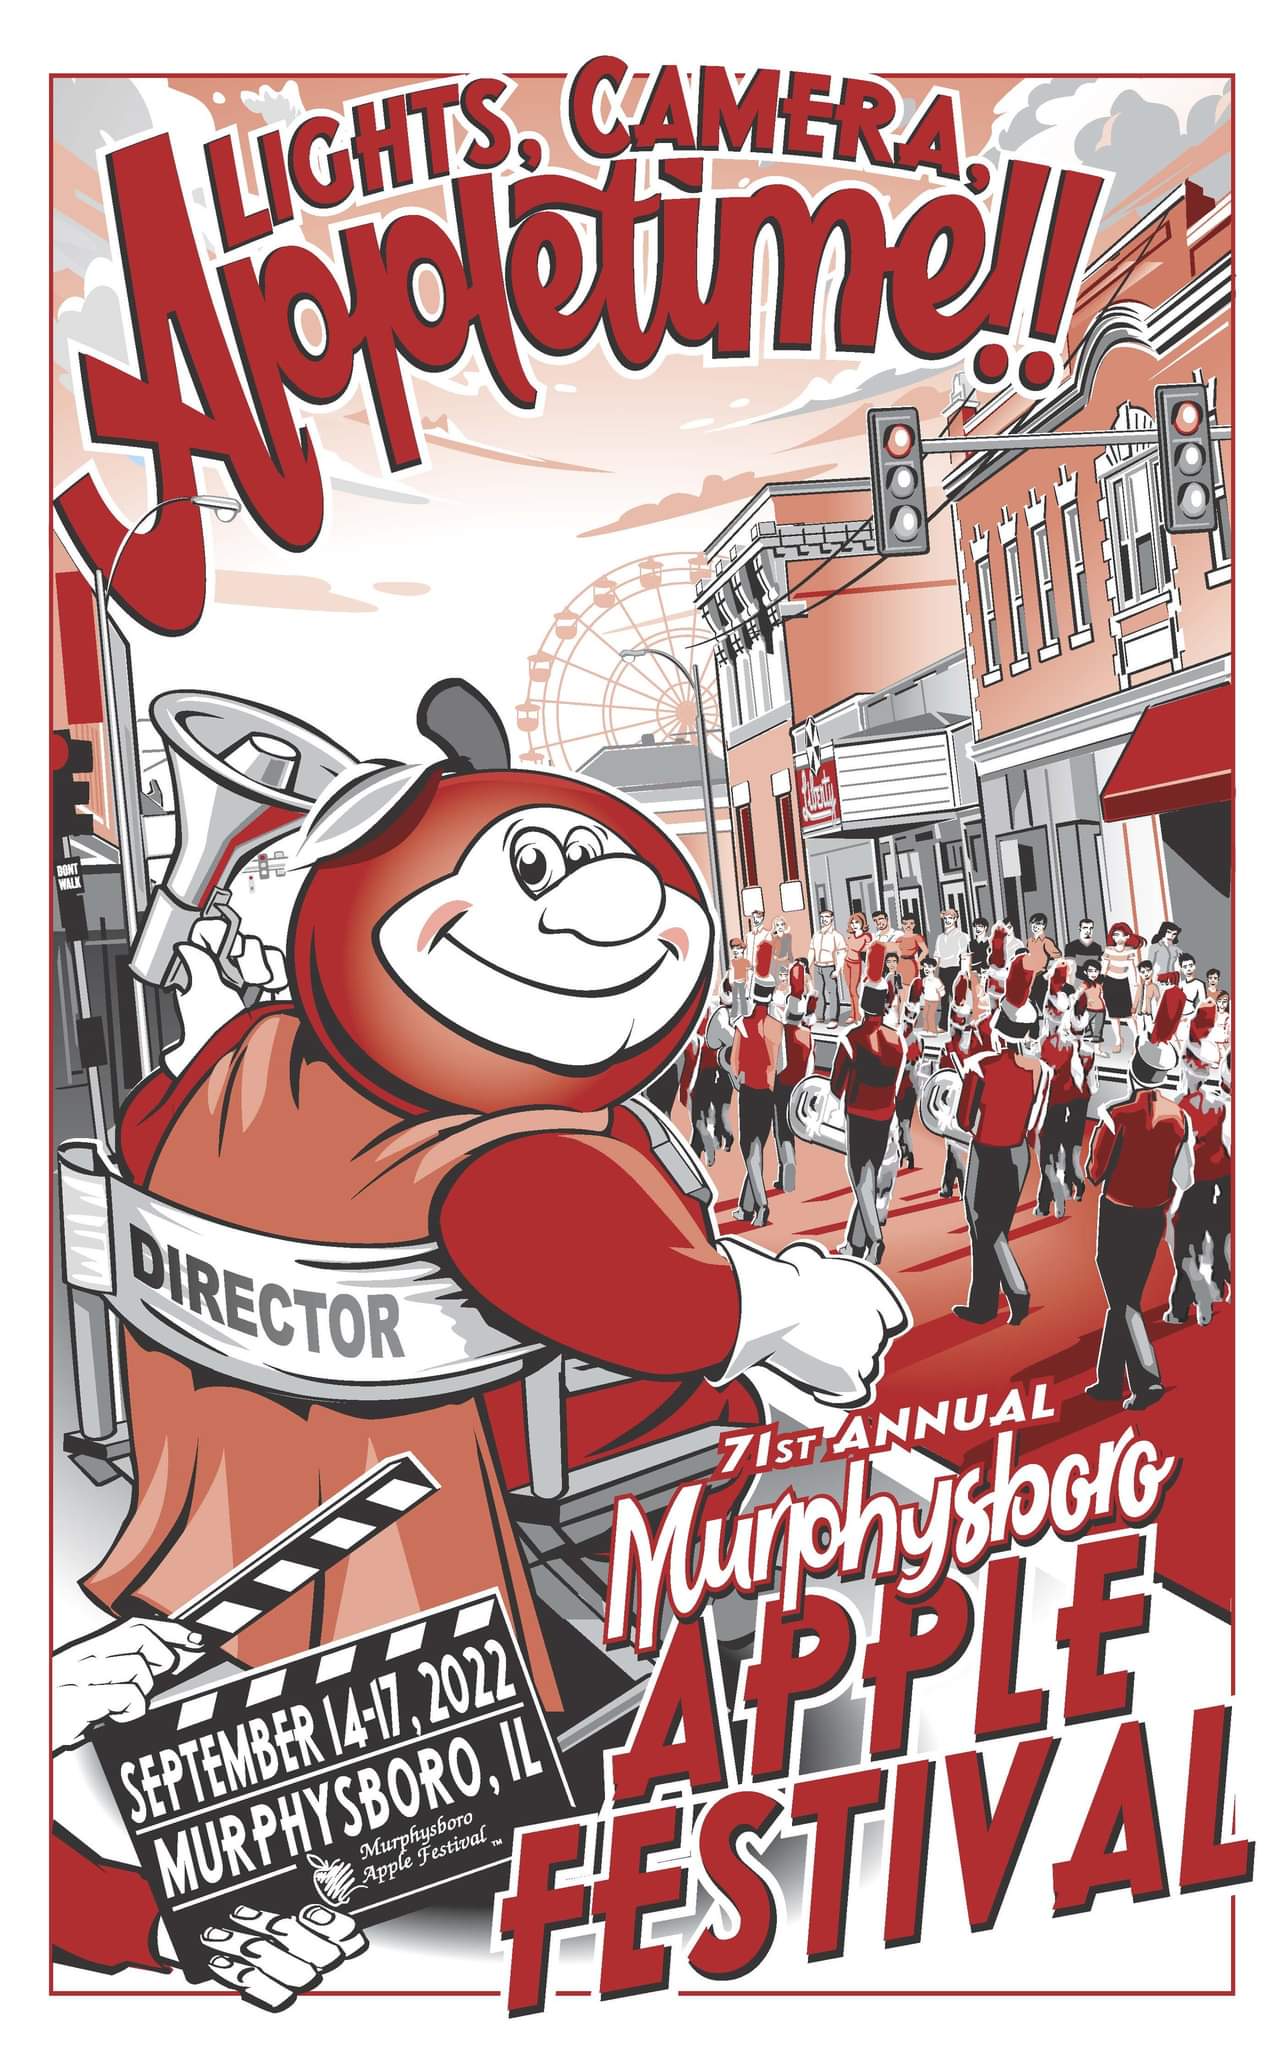 History of the Murphysboro Apple Festival Murphysboro Apple Festival